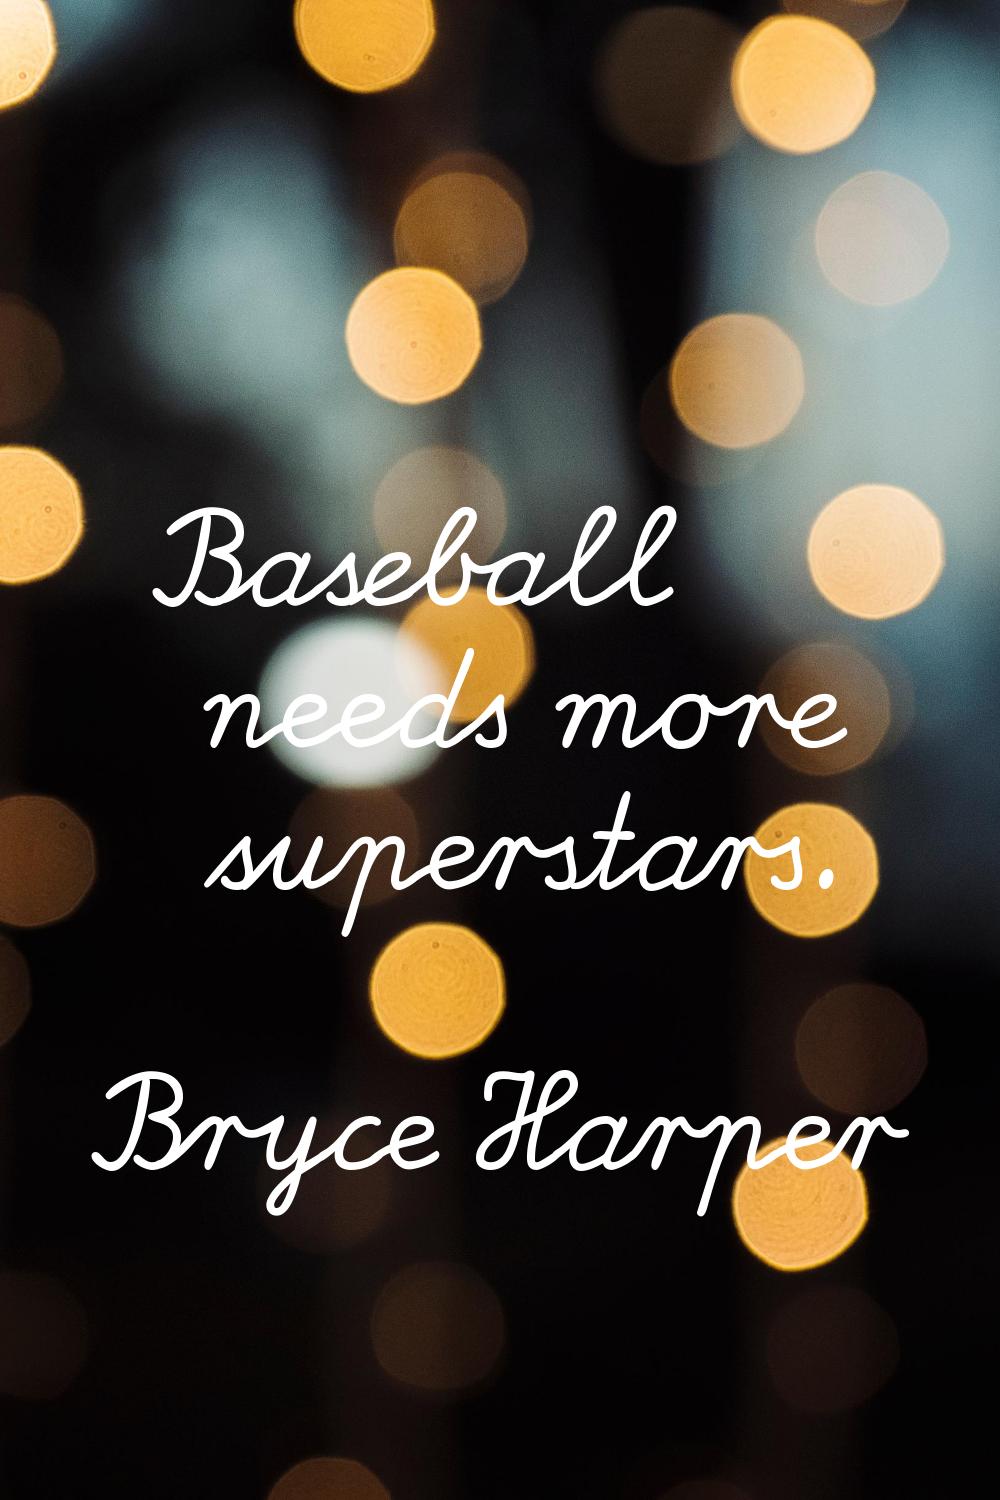 Baseball needs more superstars.